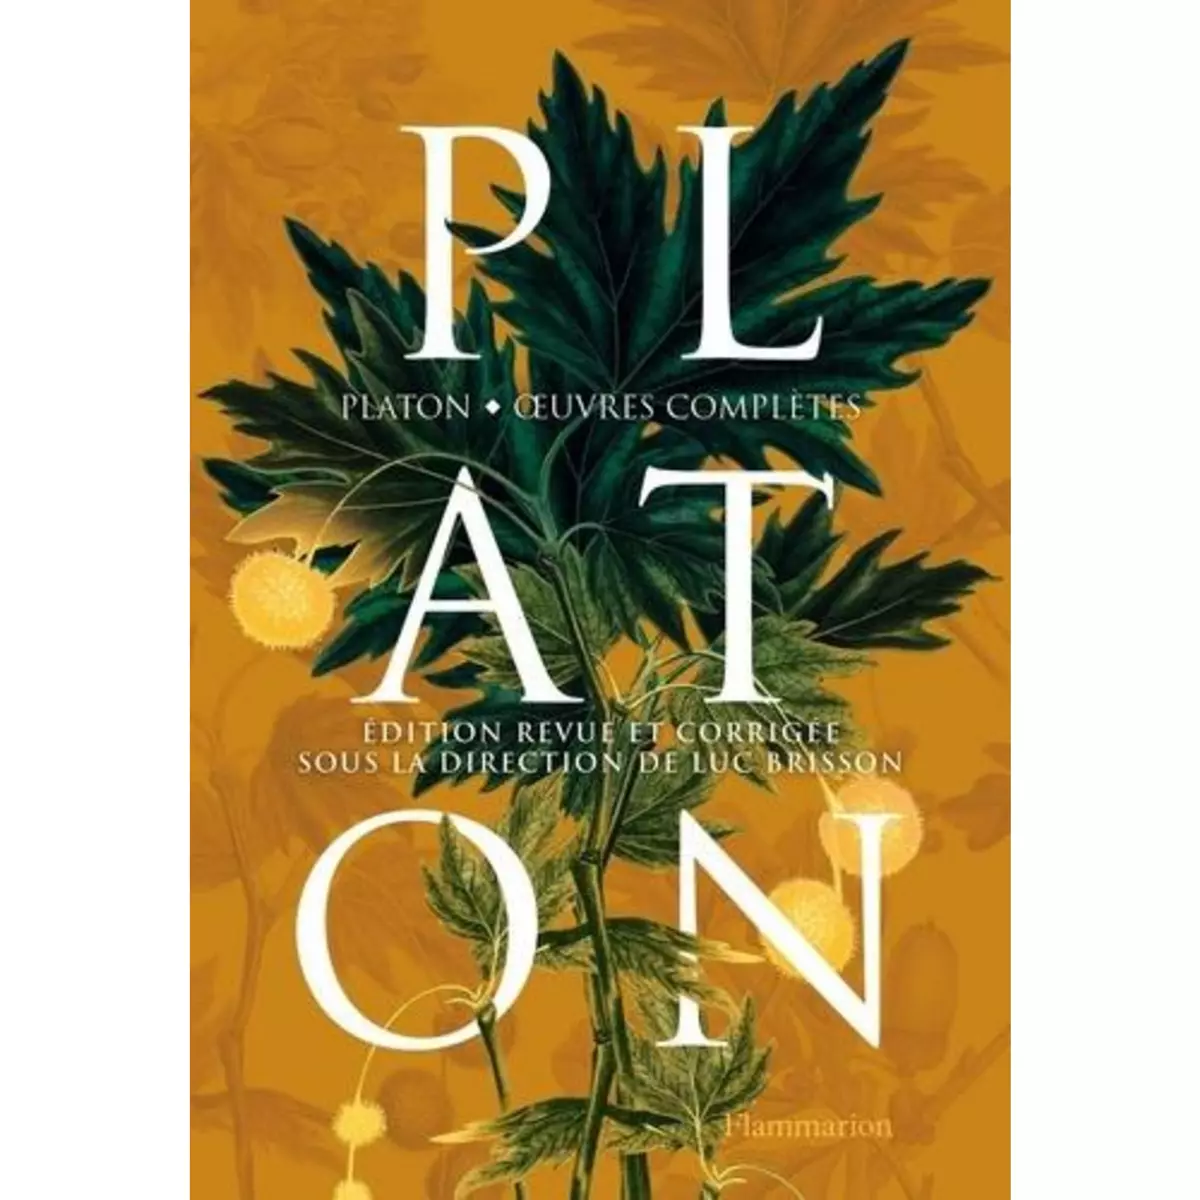  PLATON. OEUVRES COMPLETES, EDITION REVUE ET CORRIGEE, Platon